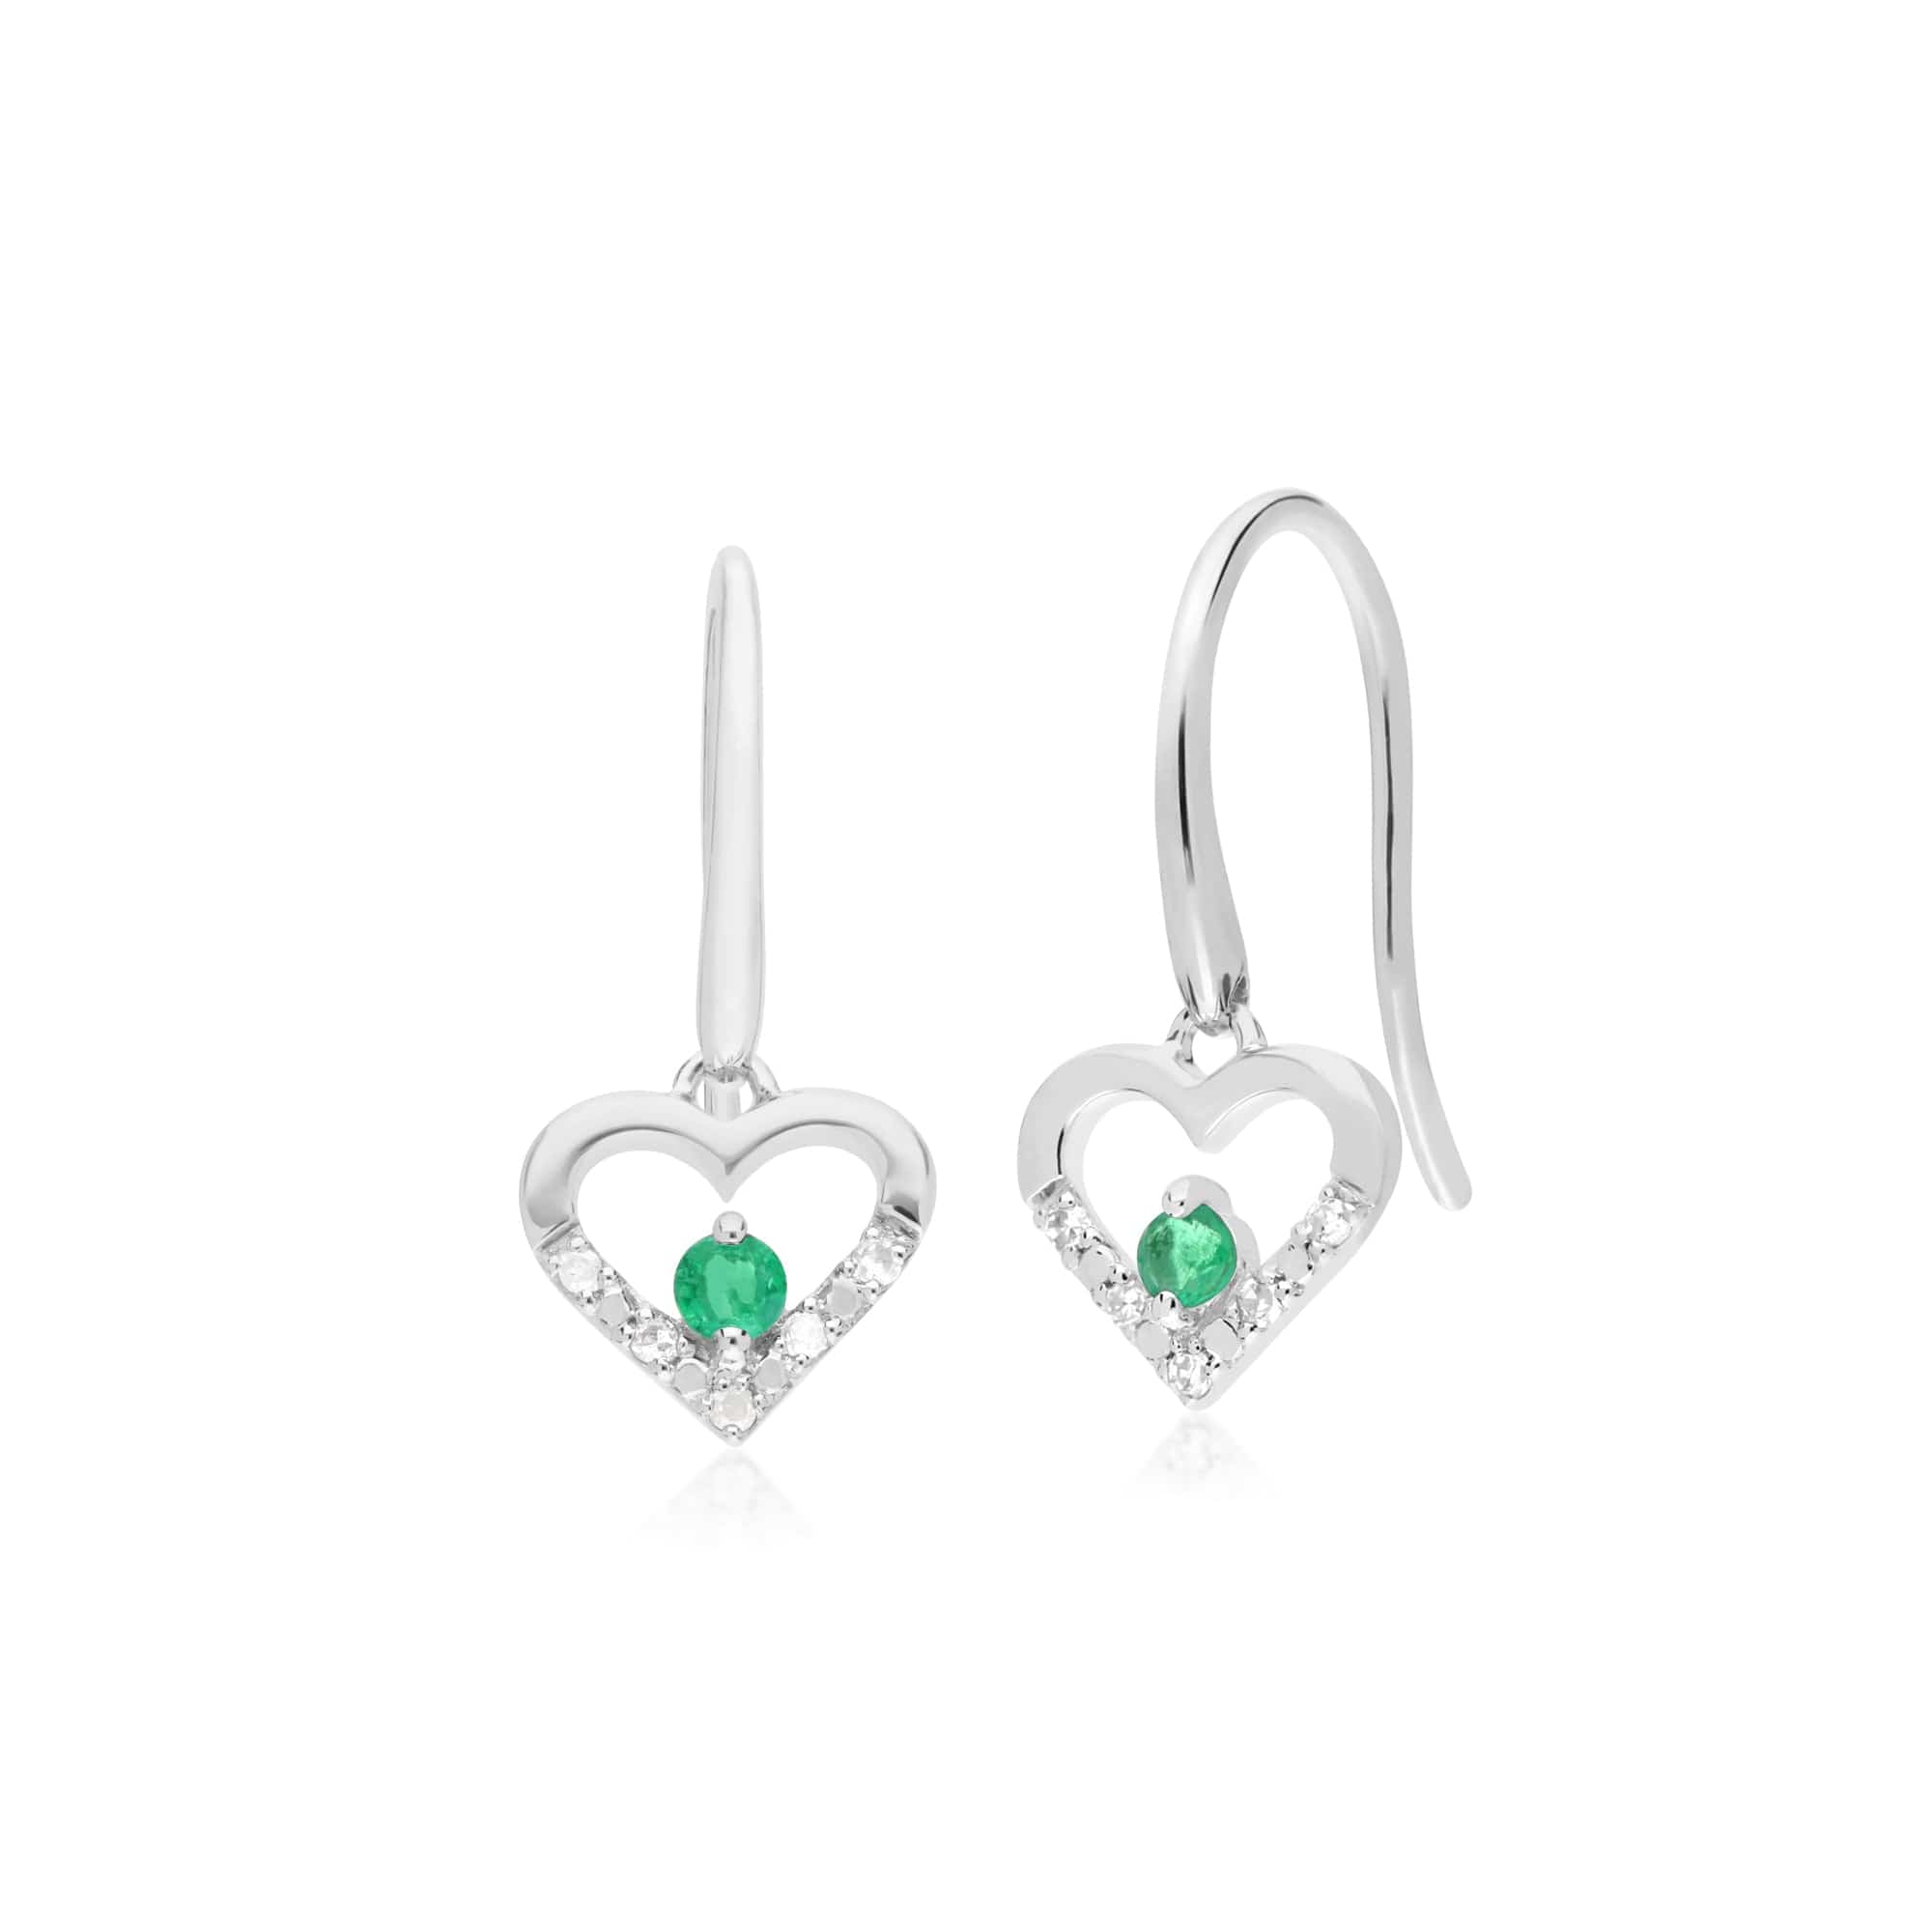 162E0258039-162P0219039 Classic Round Emerald & Diamond Heart Drop Earrings & Pendant Set in 9ct White Gold 2